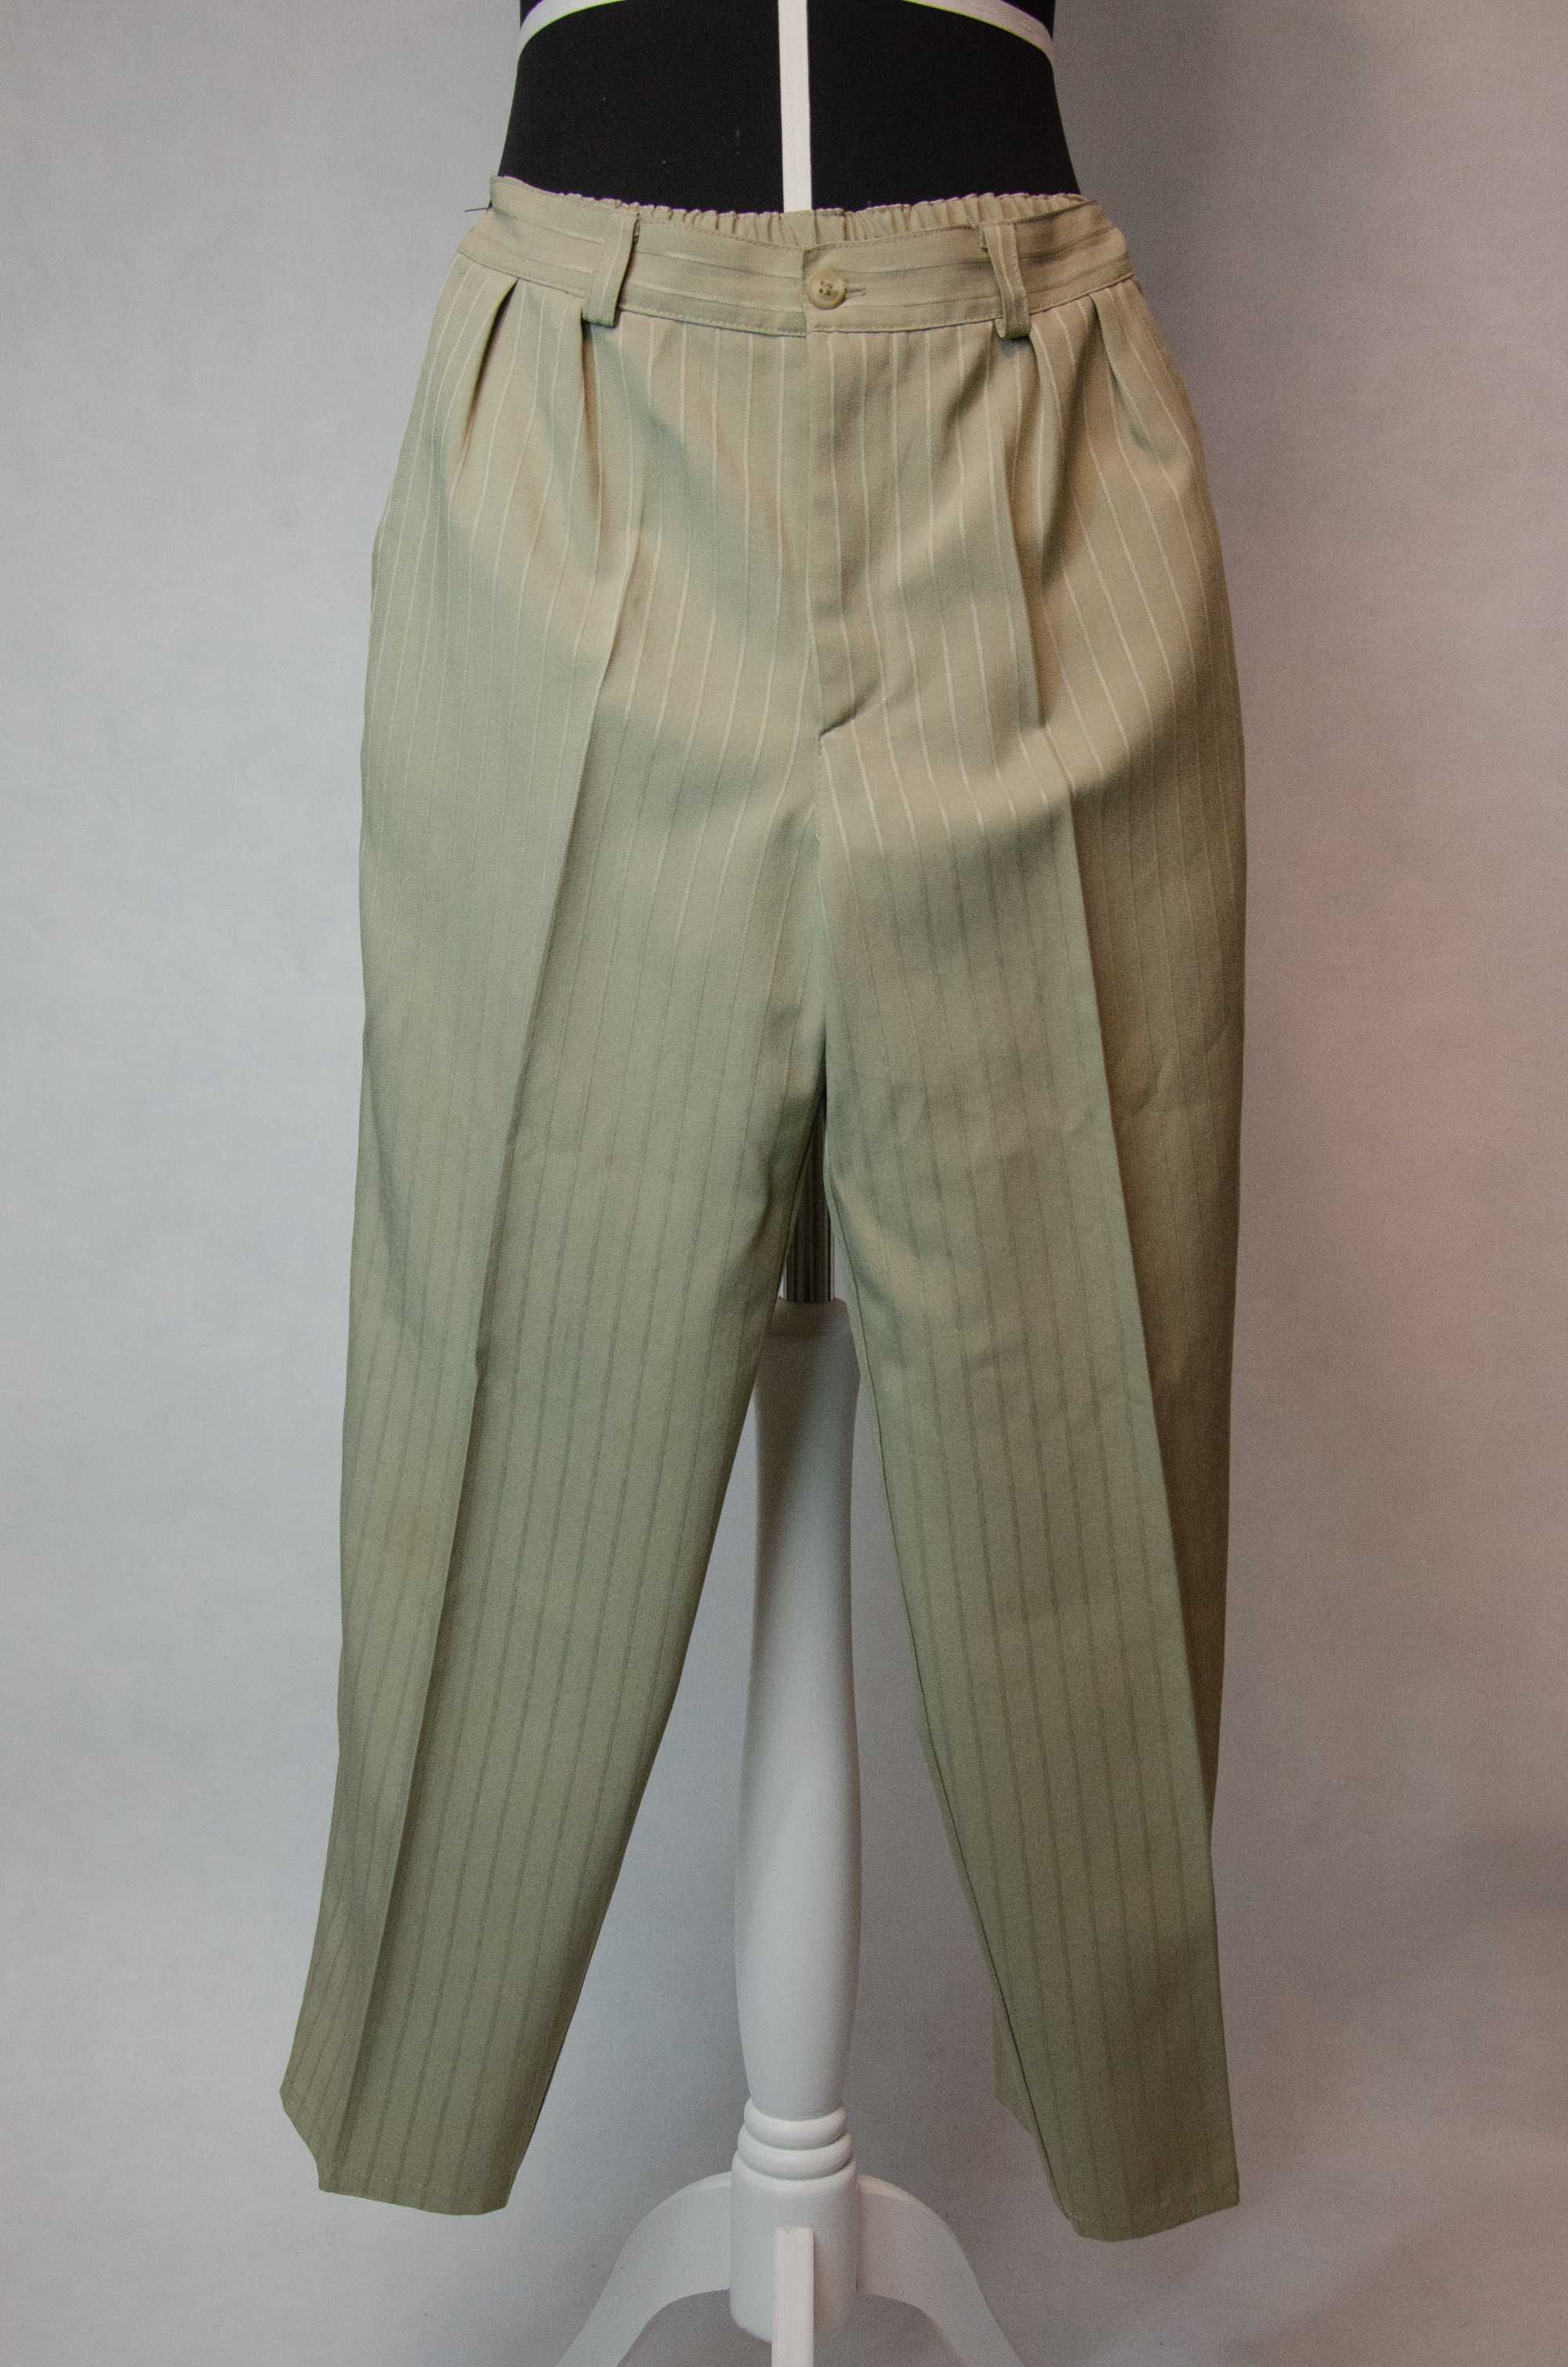 kamizelka i spodnie eleganckie 146cm